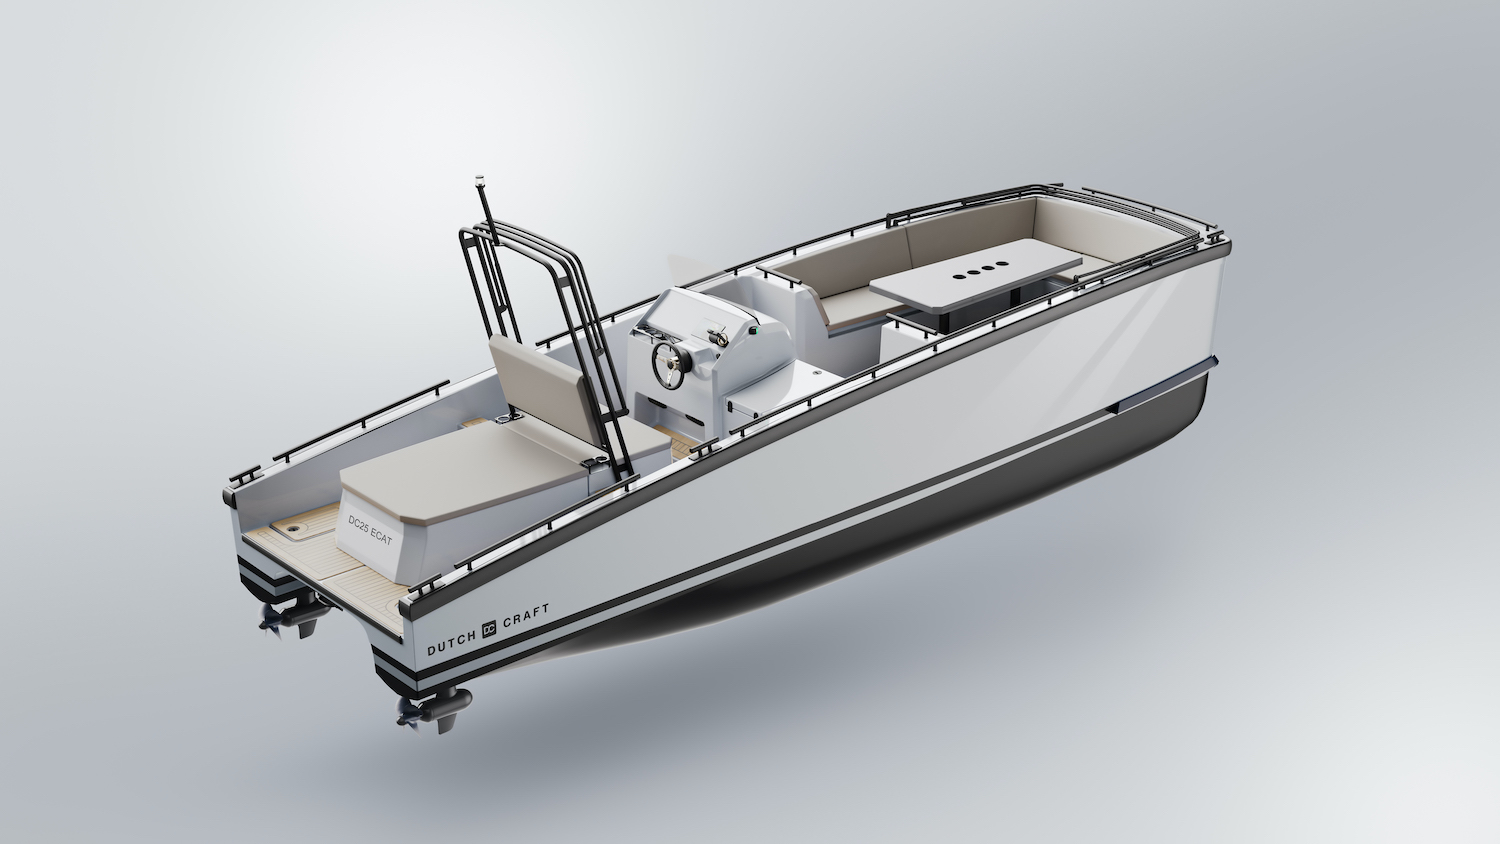 DutchCraft to Launch Electric Catamaran Dayboat